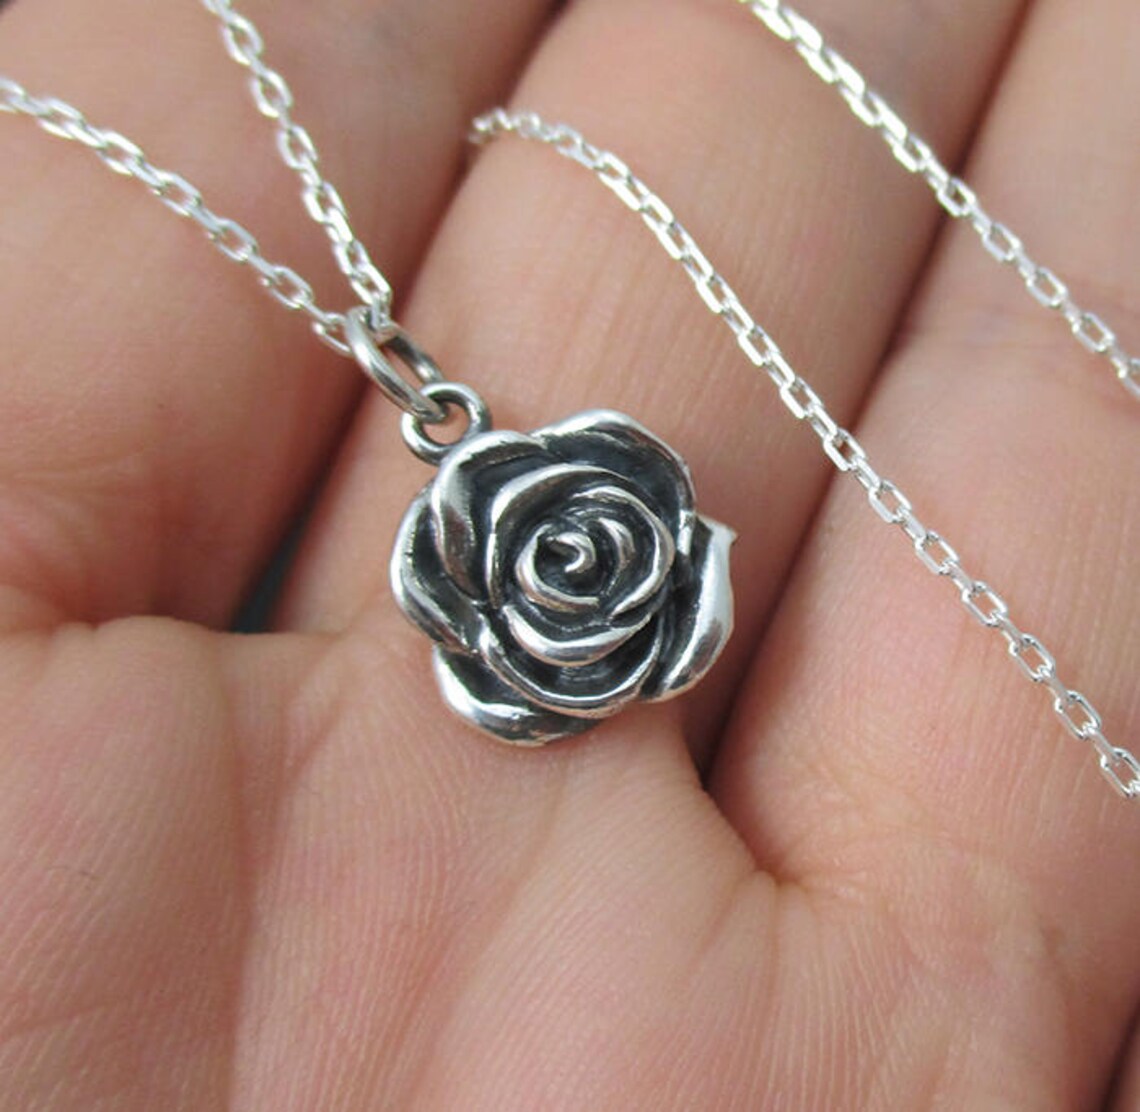 Clearance Flower Rose Charms w/ Leaf (10pcs) (20mm x 10mm / Tibetan Silver) Floral Findings Pendant Bracelet Earrings Zipper Pulls Keychain CHM278